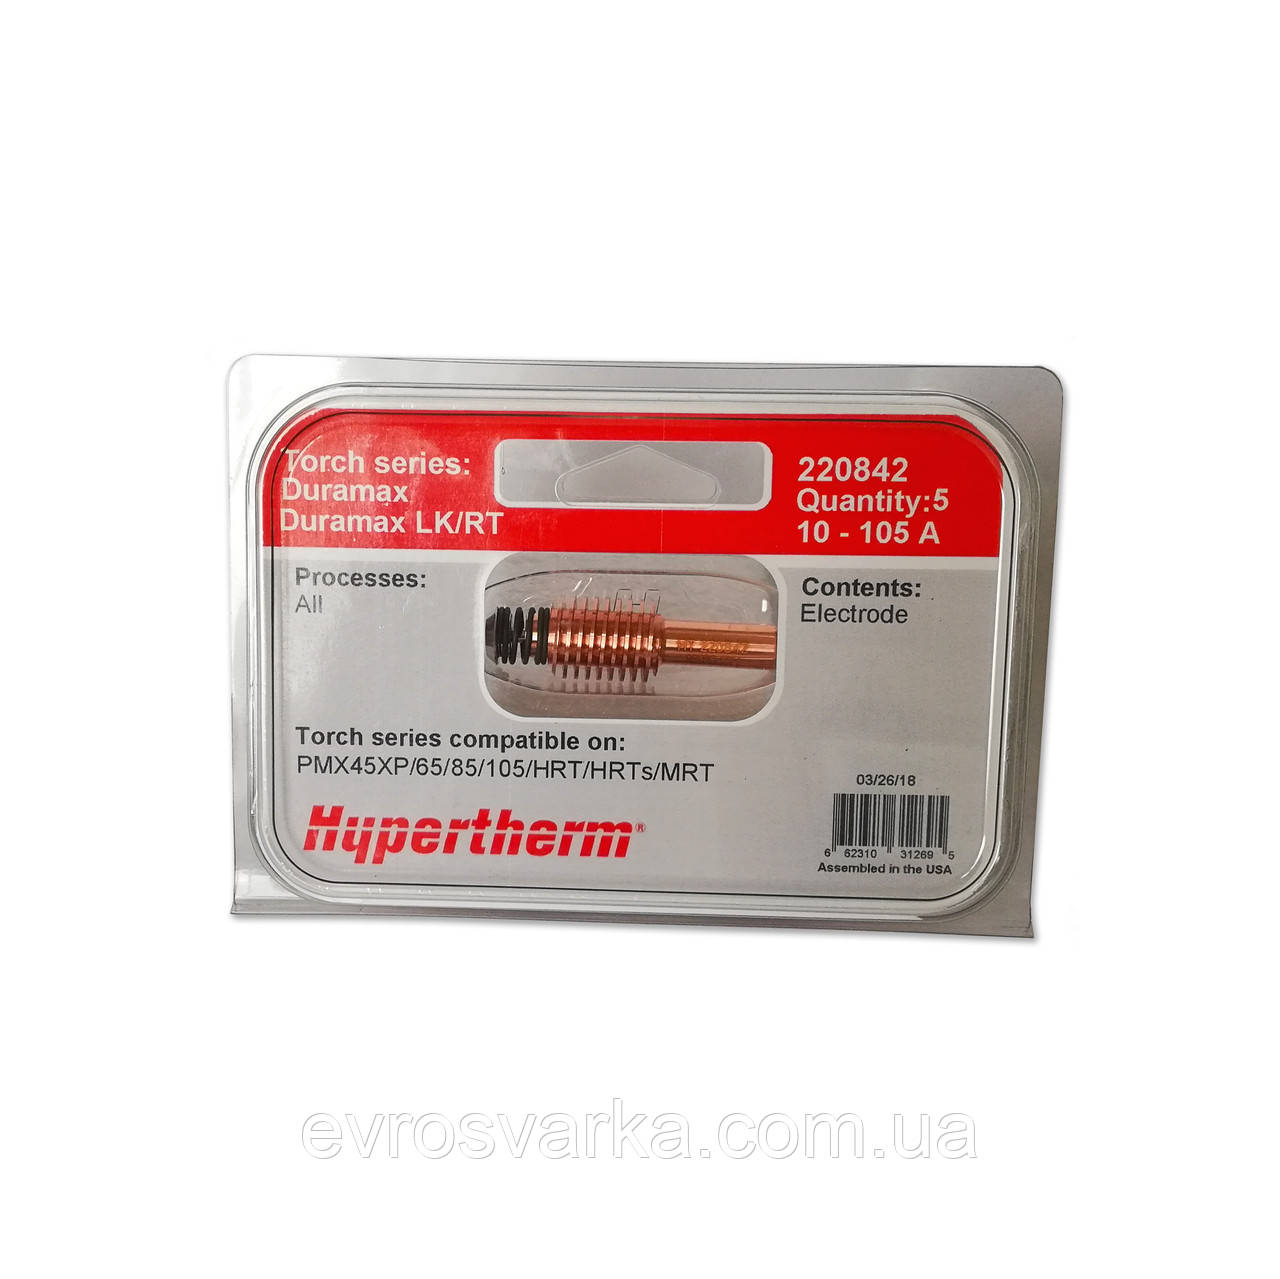 Електрод / Electrode Hypertherm 220842 (105 Aмпер) оригінал USA